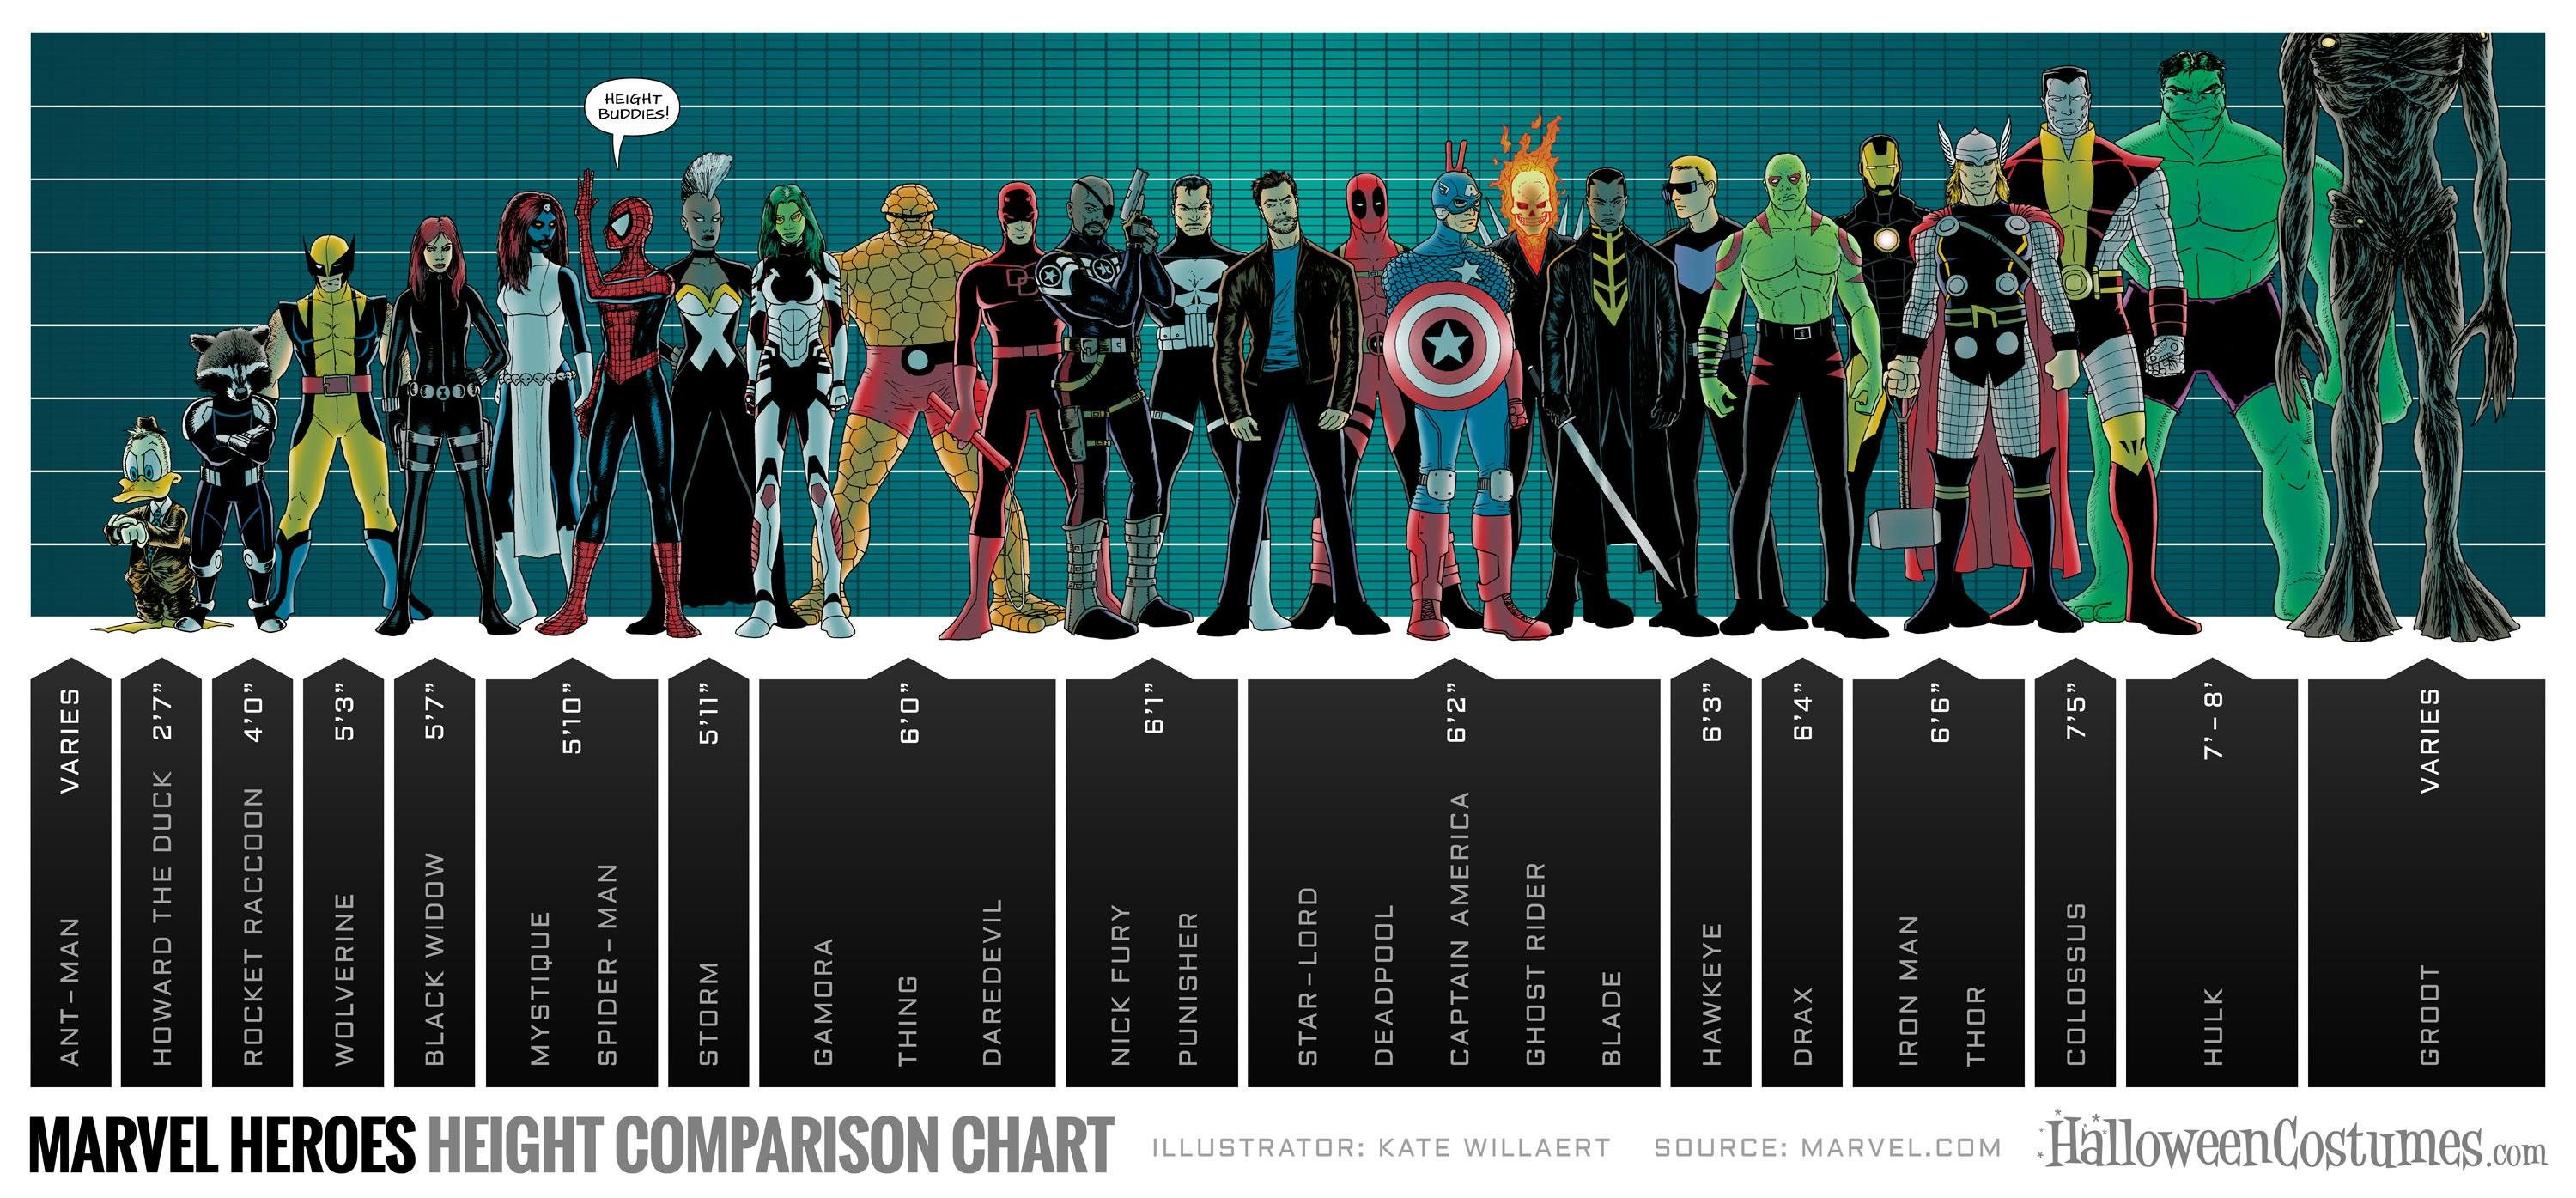 Marvel-Heroes-Height-Comparison-Chart.jpg